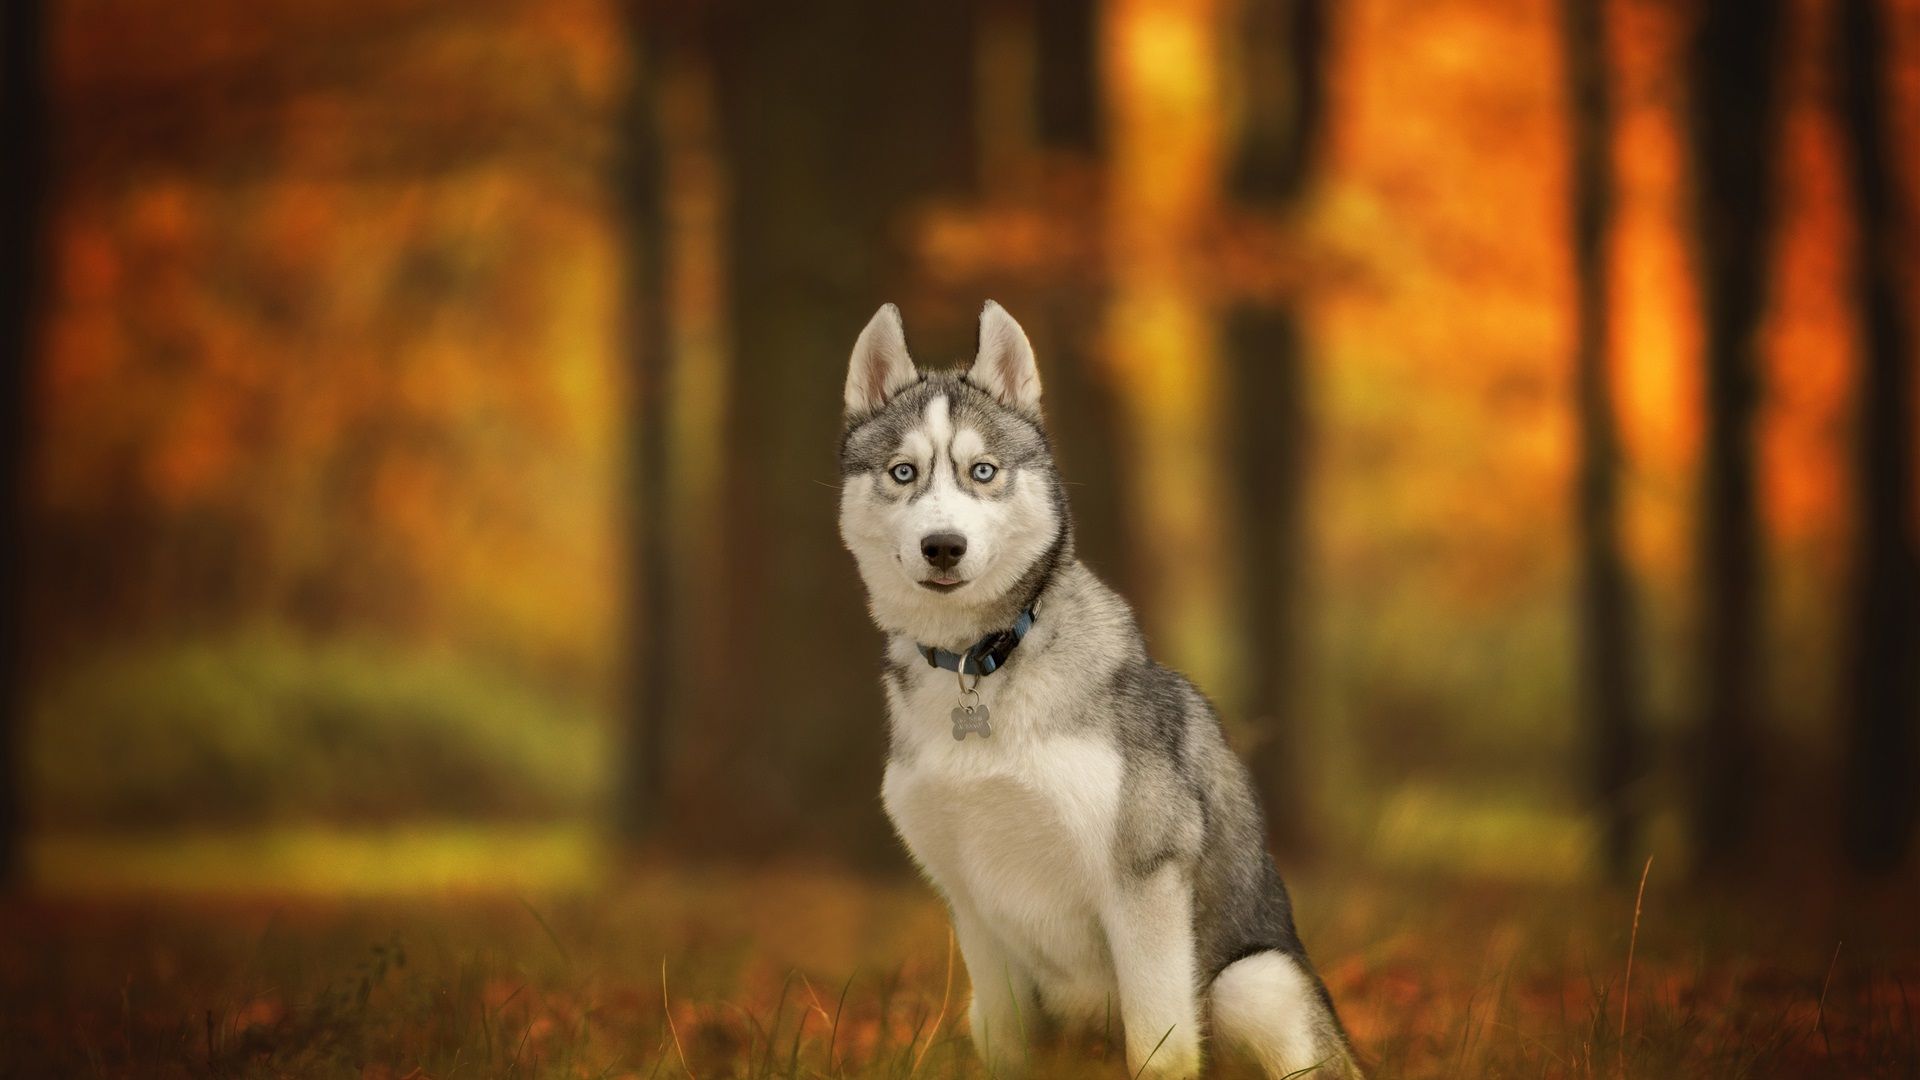 Wallpaper Husky dog sit on ground, autumn 3840x2160 UHD 4K Picture, Image